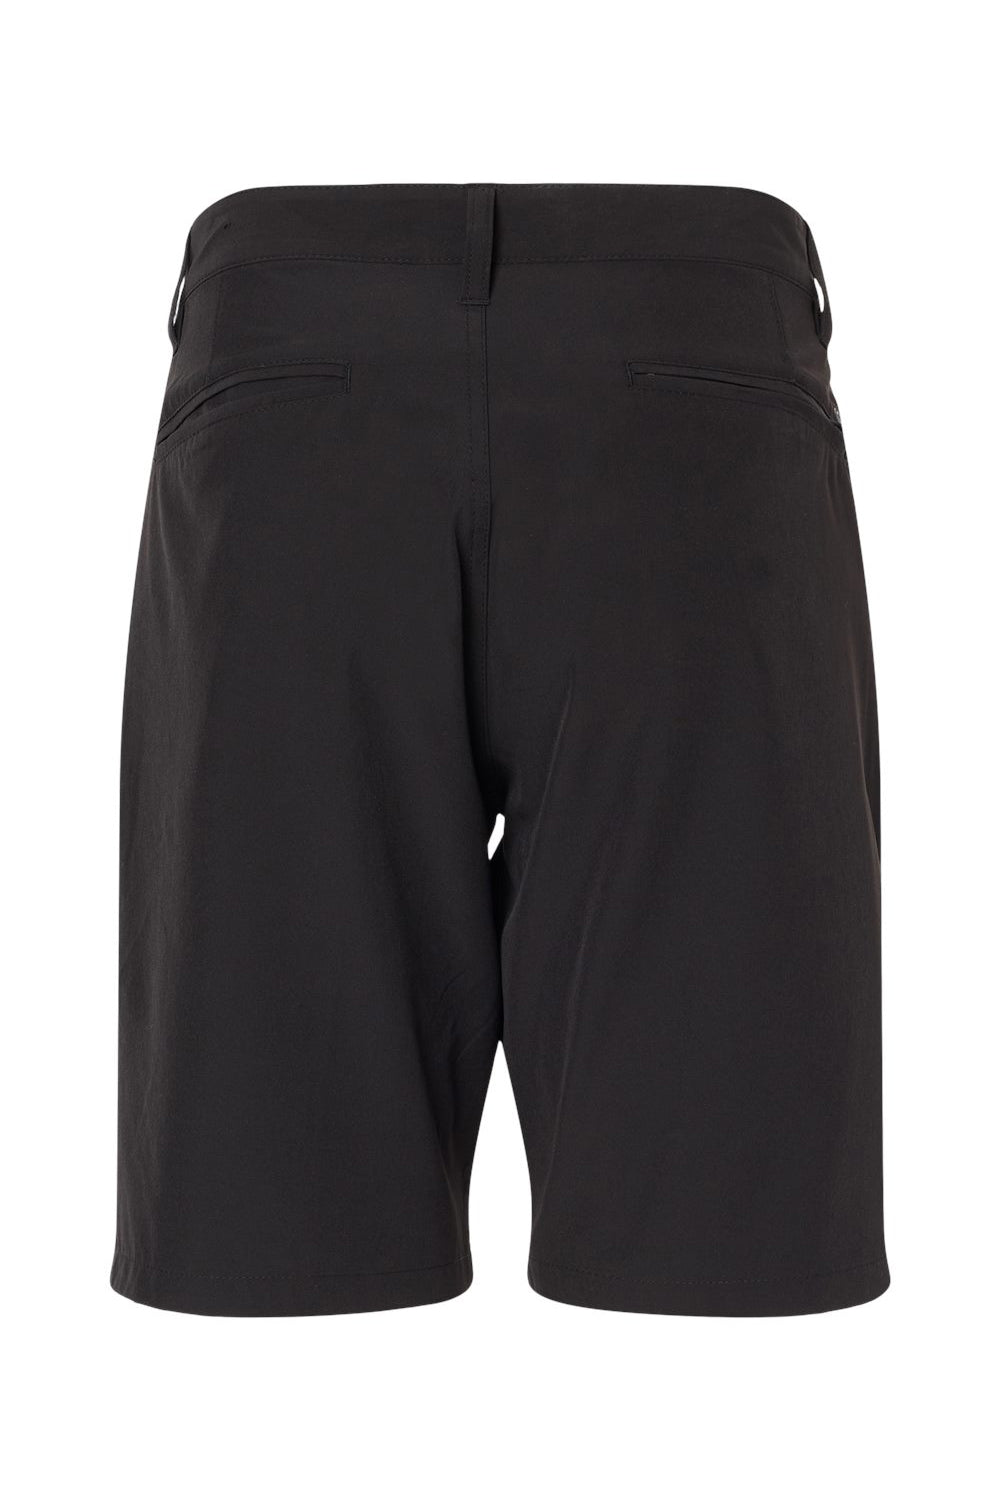 Burnside 9820 Mens Hybrid Stretch Shorts w/ Pockets Black Flat Back